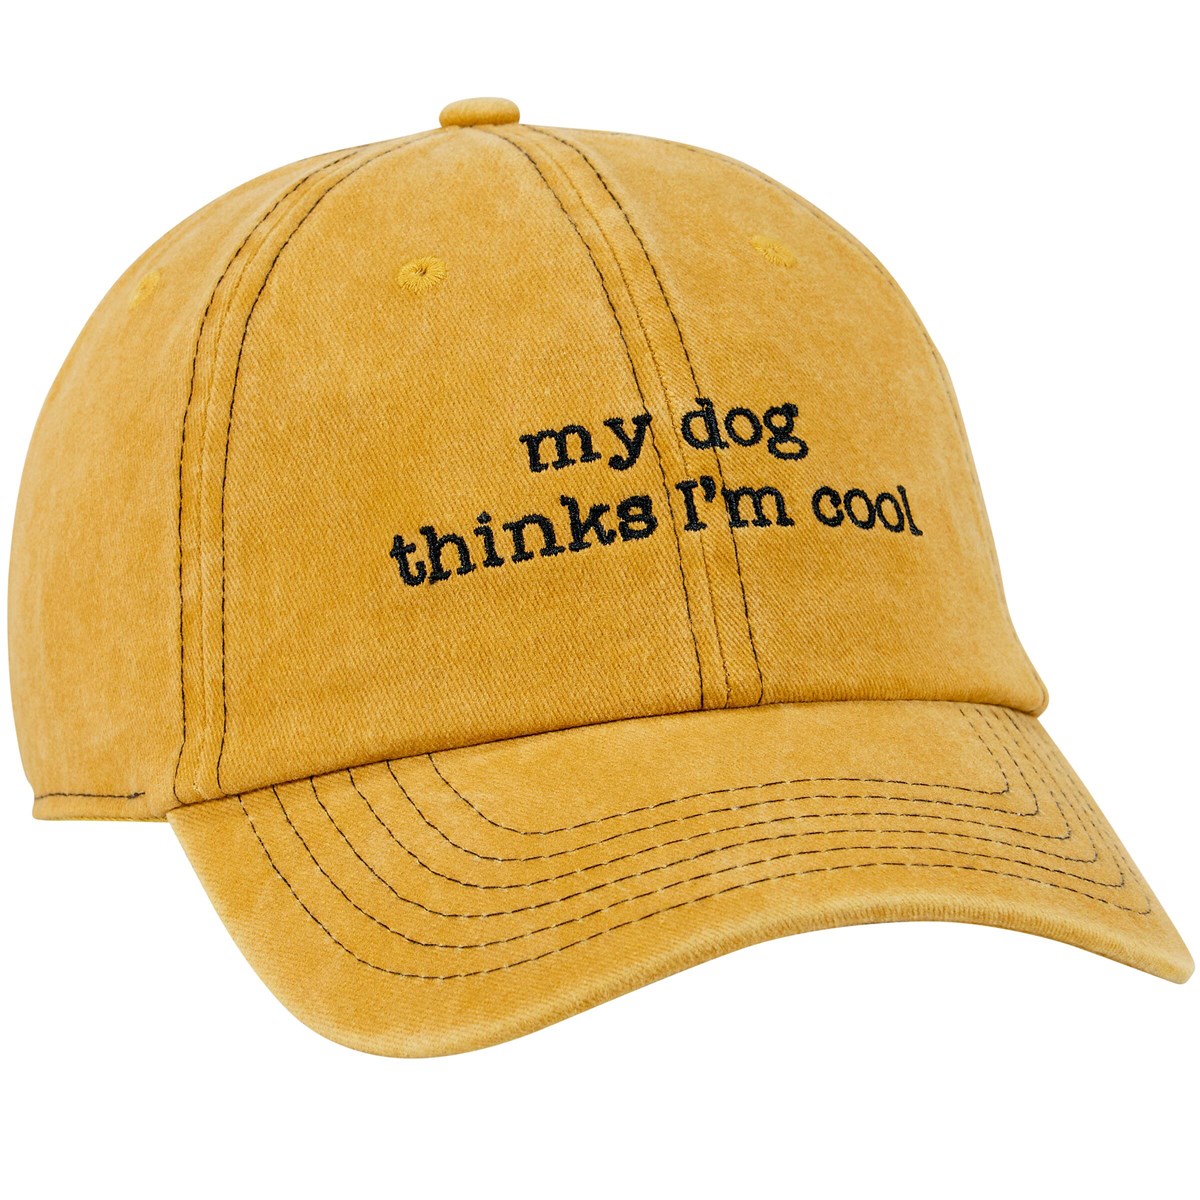 My Dog Baseball Cap - Cotton, Metal